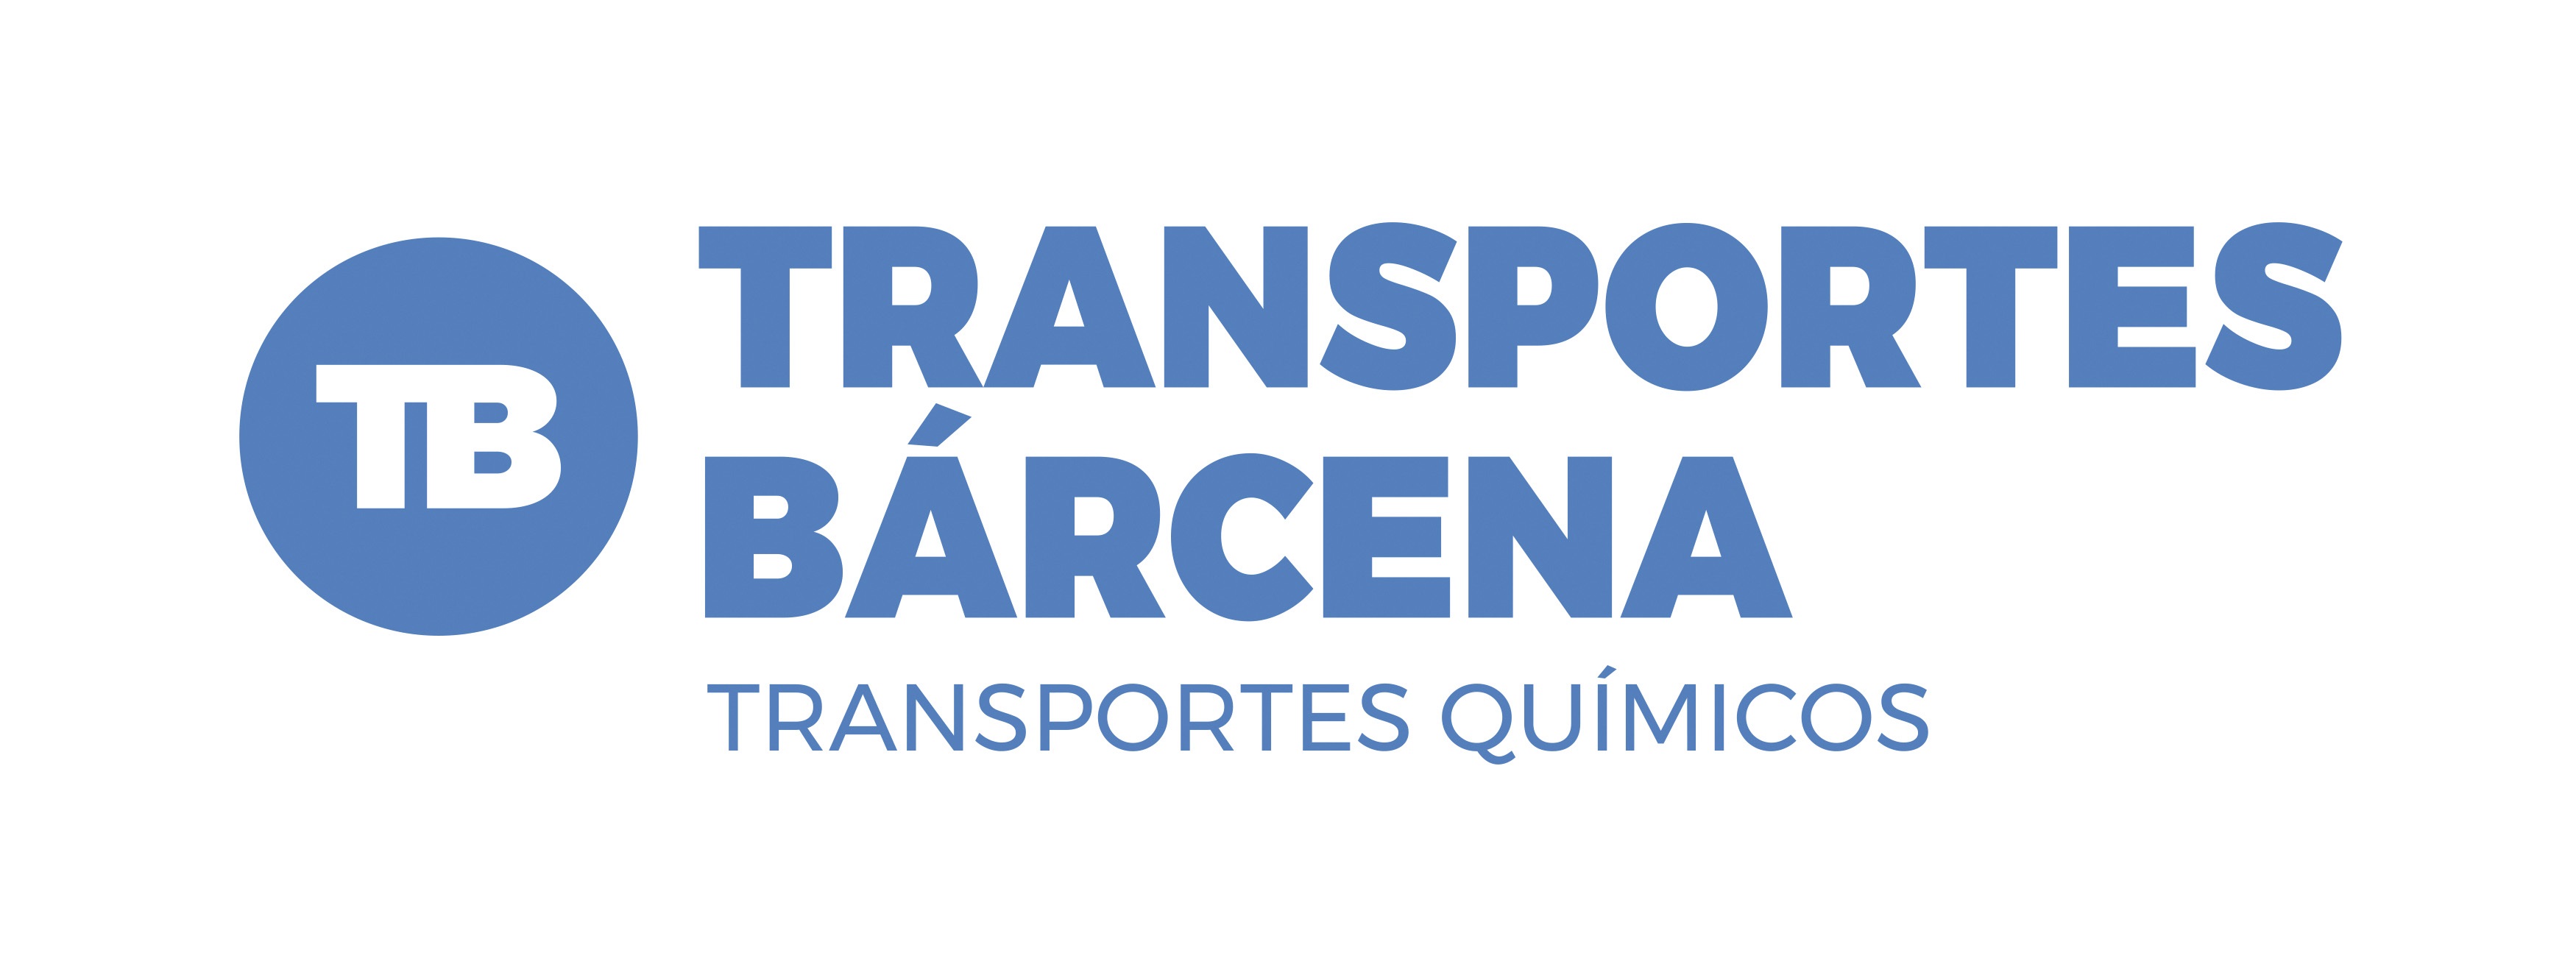 TRANSPORTES BARCENA